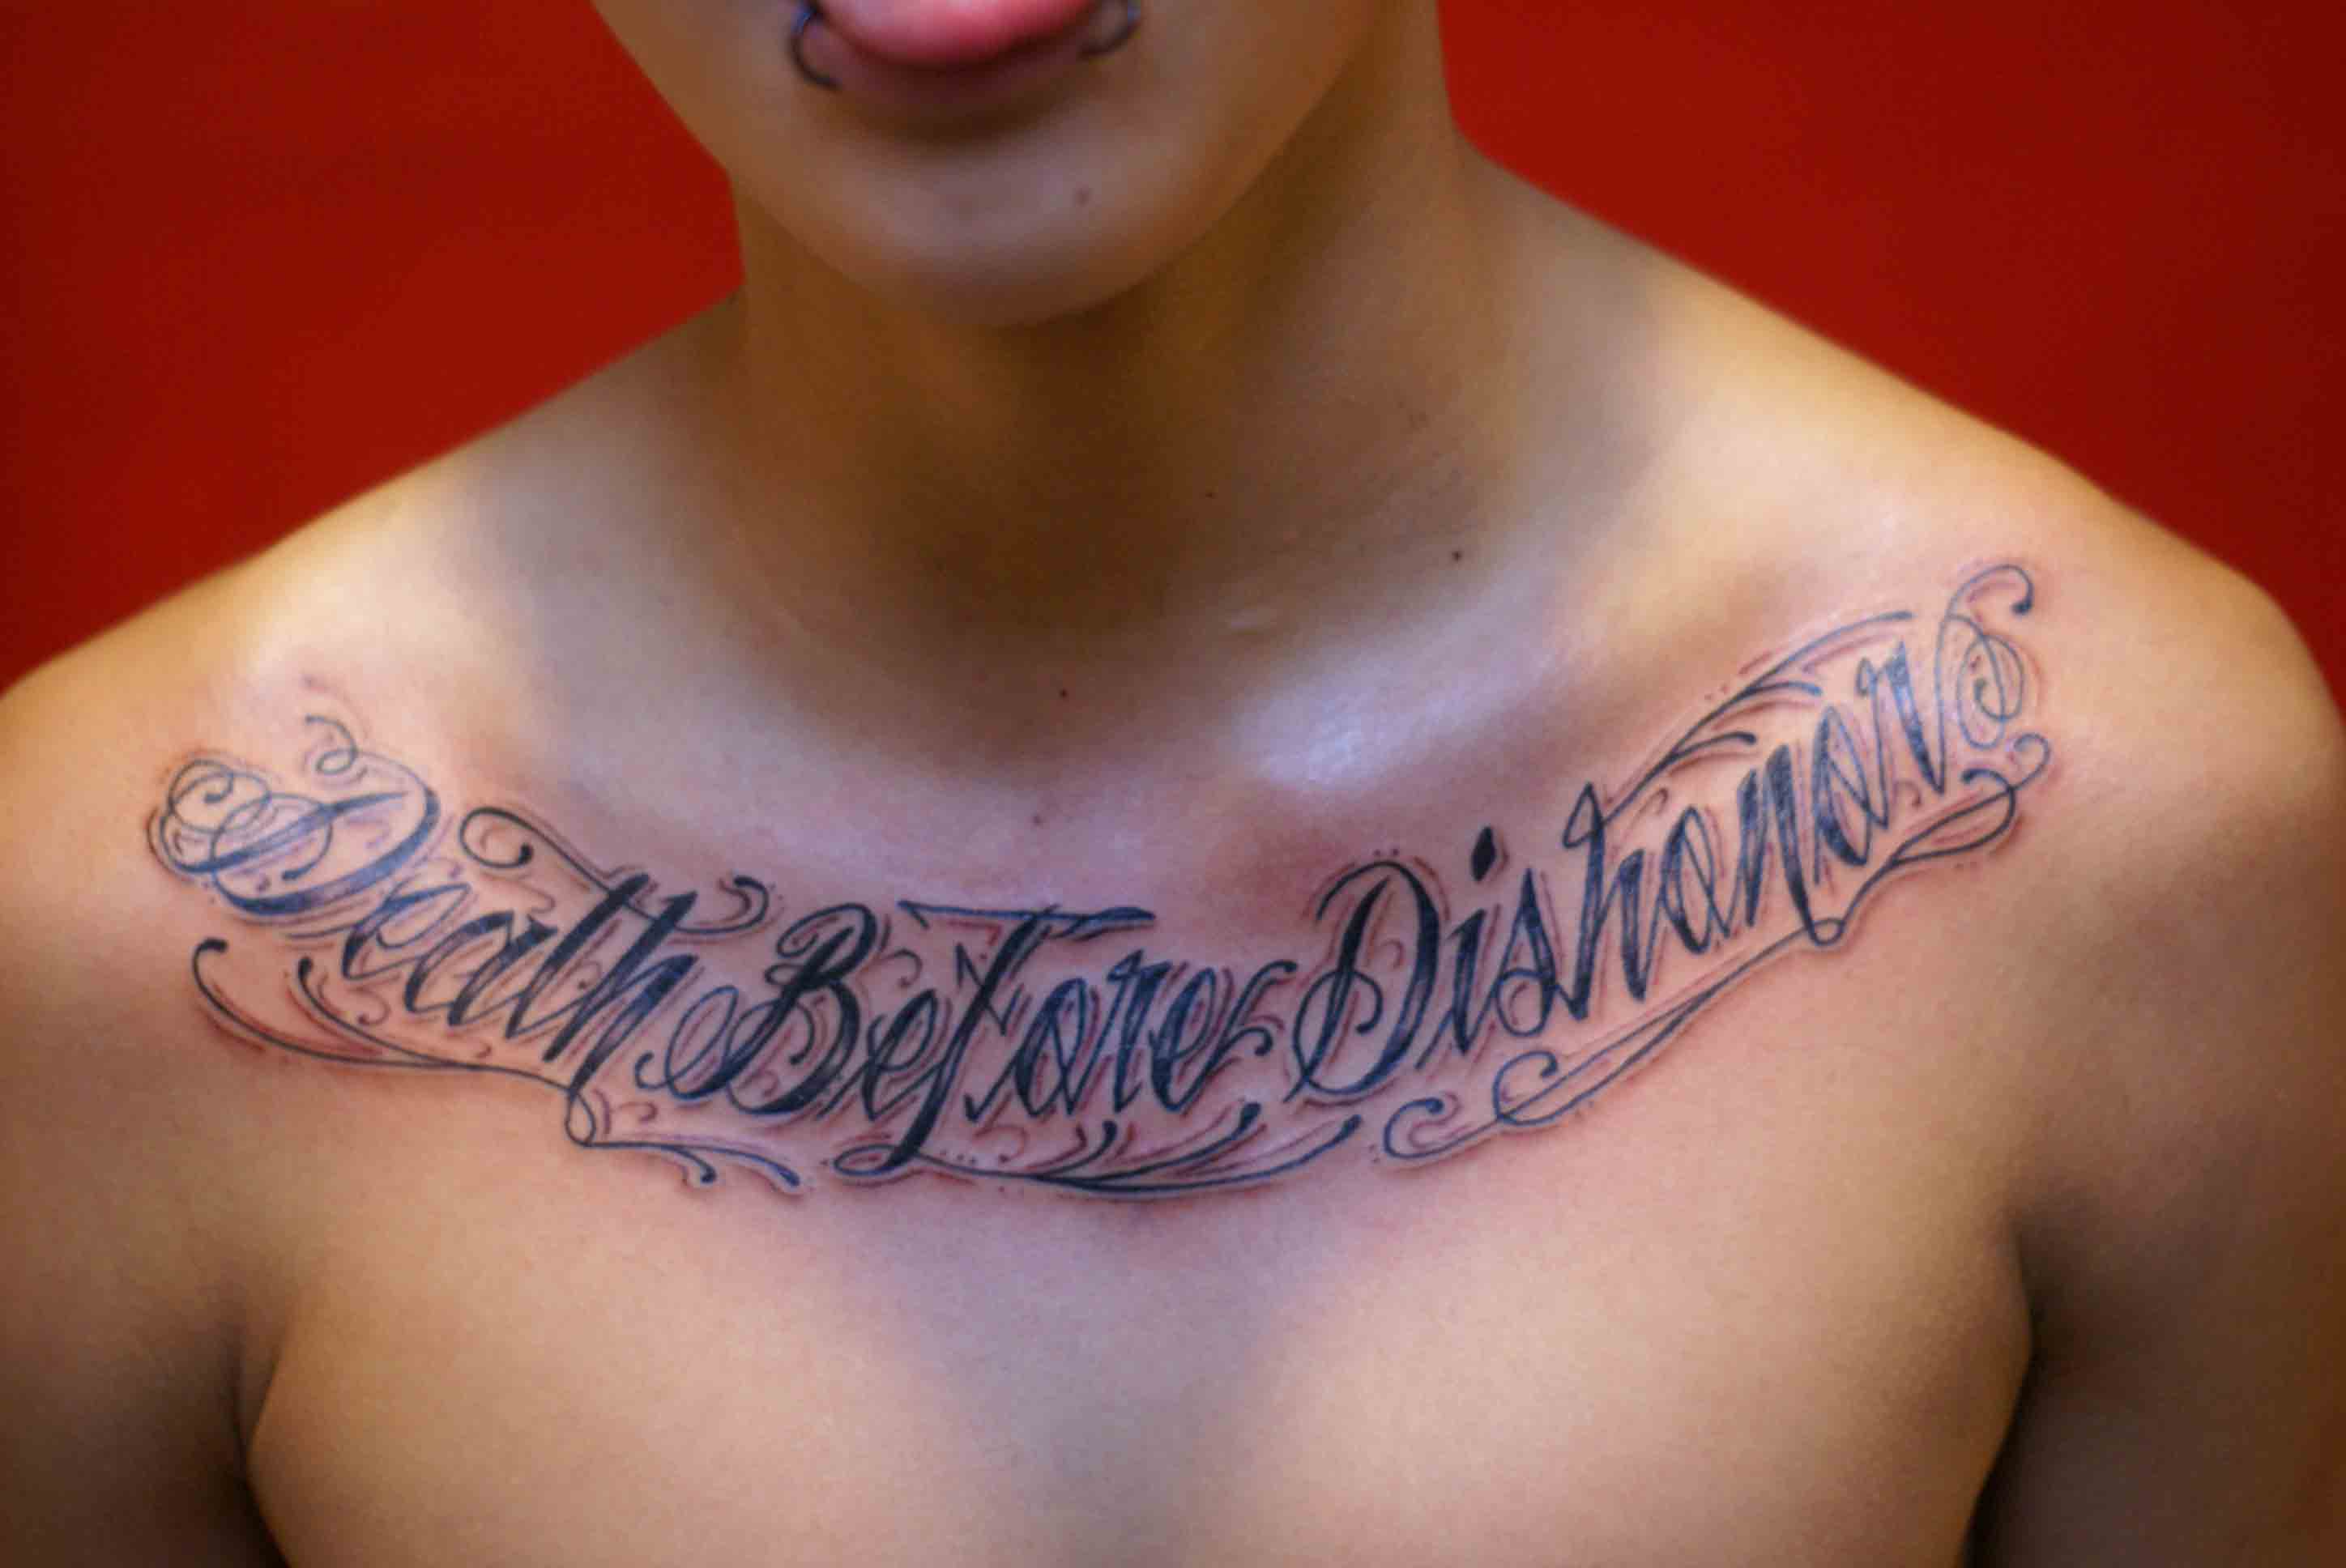 Tagged with kat von d, tattoo